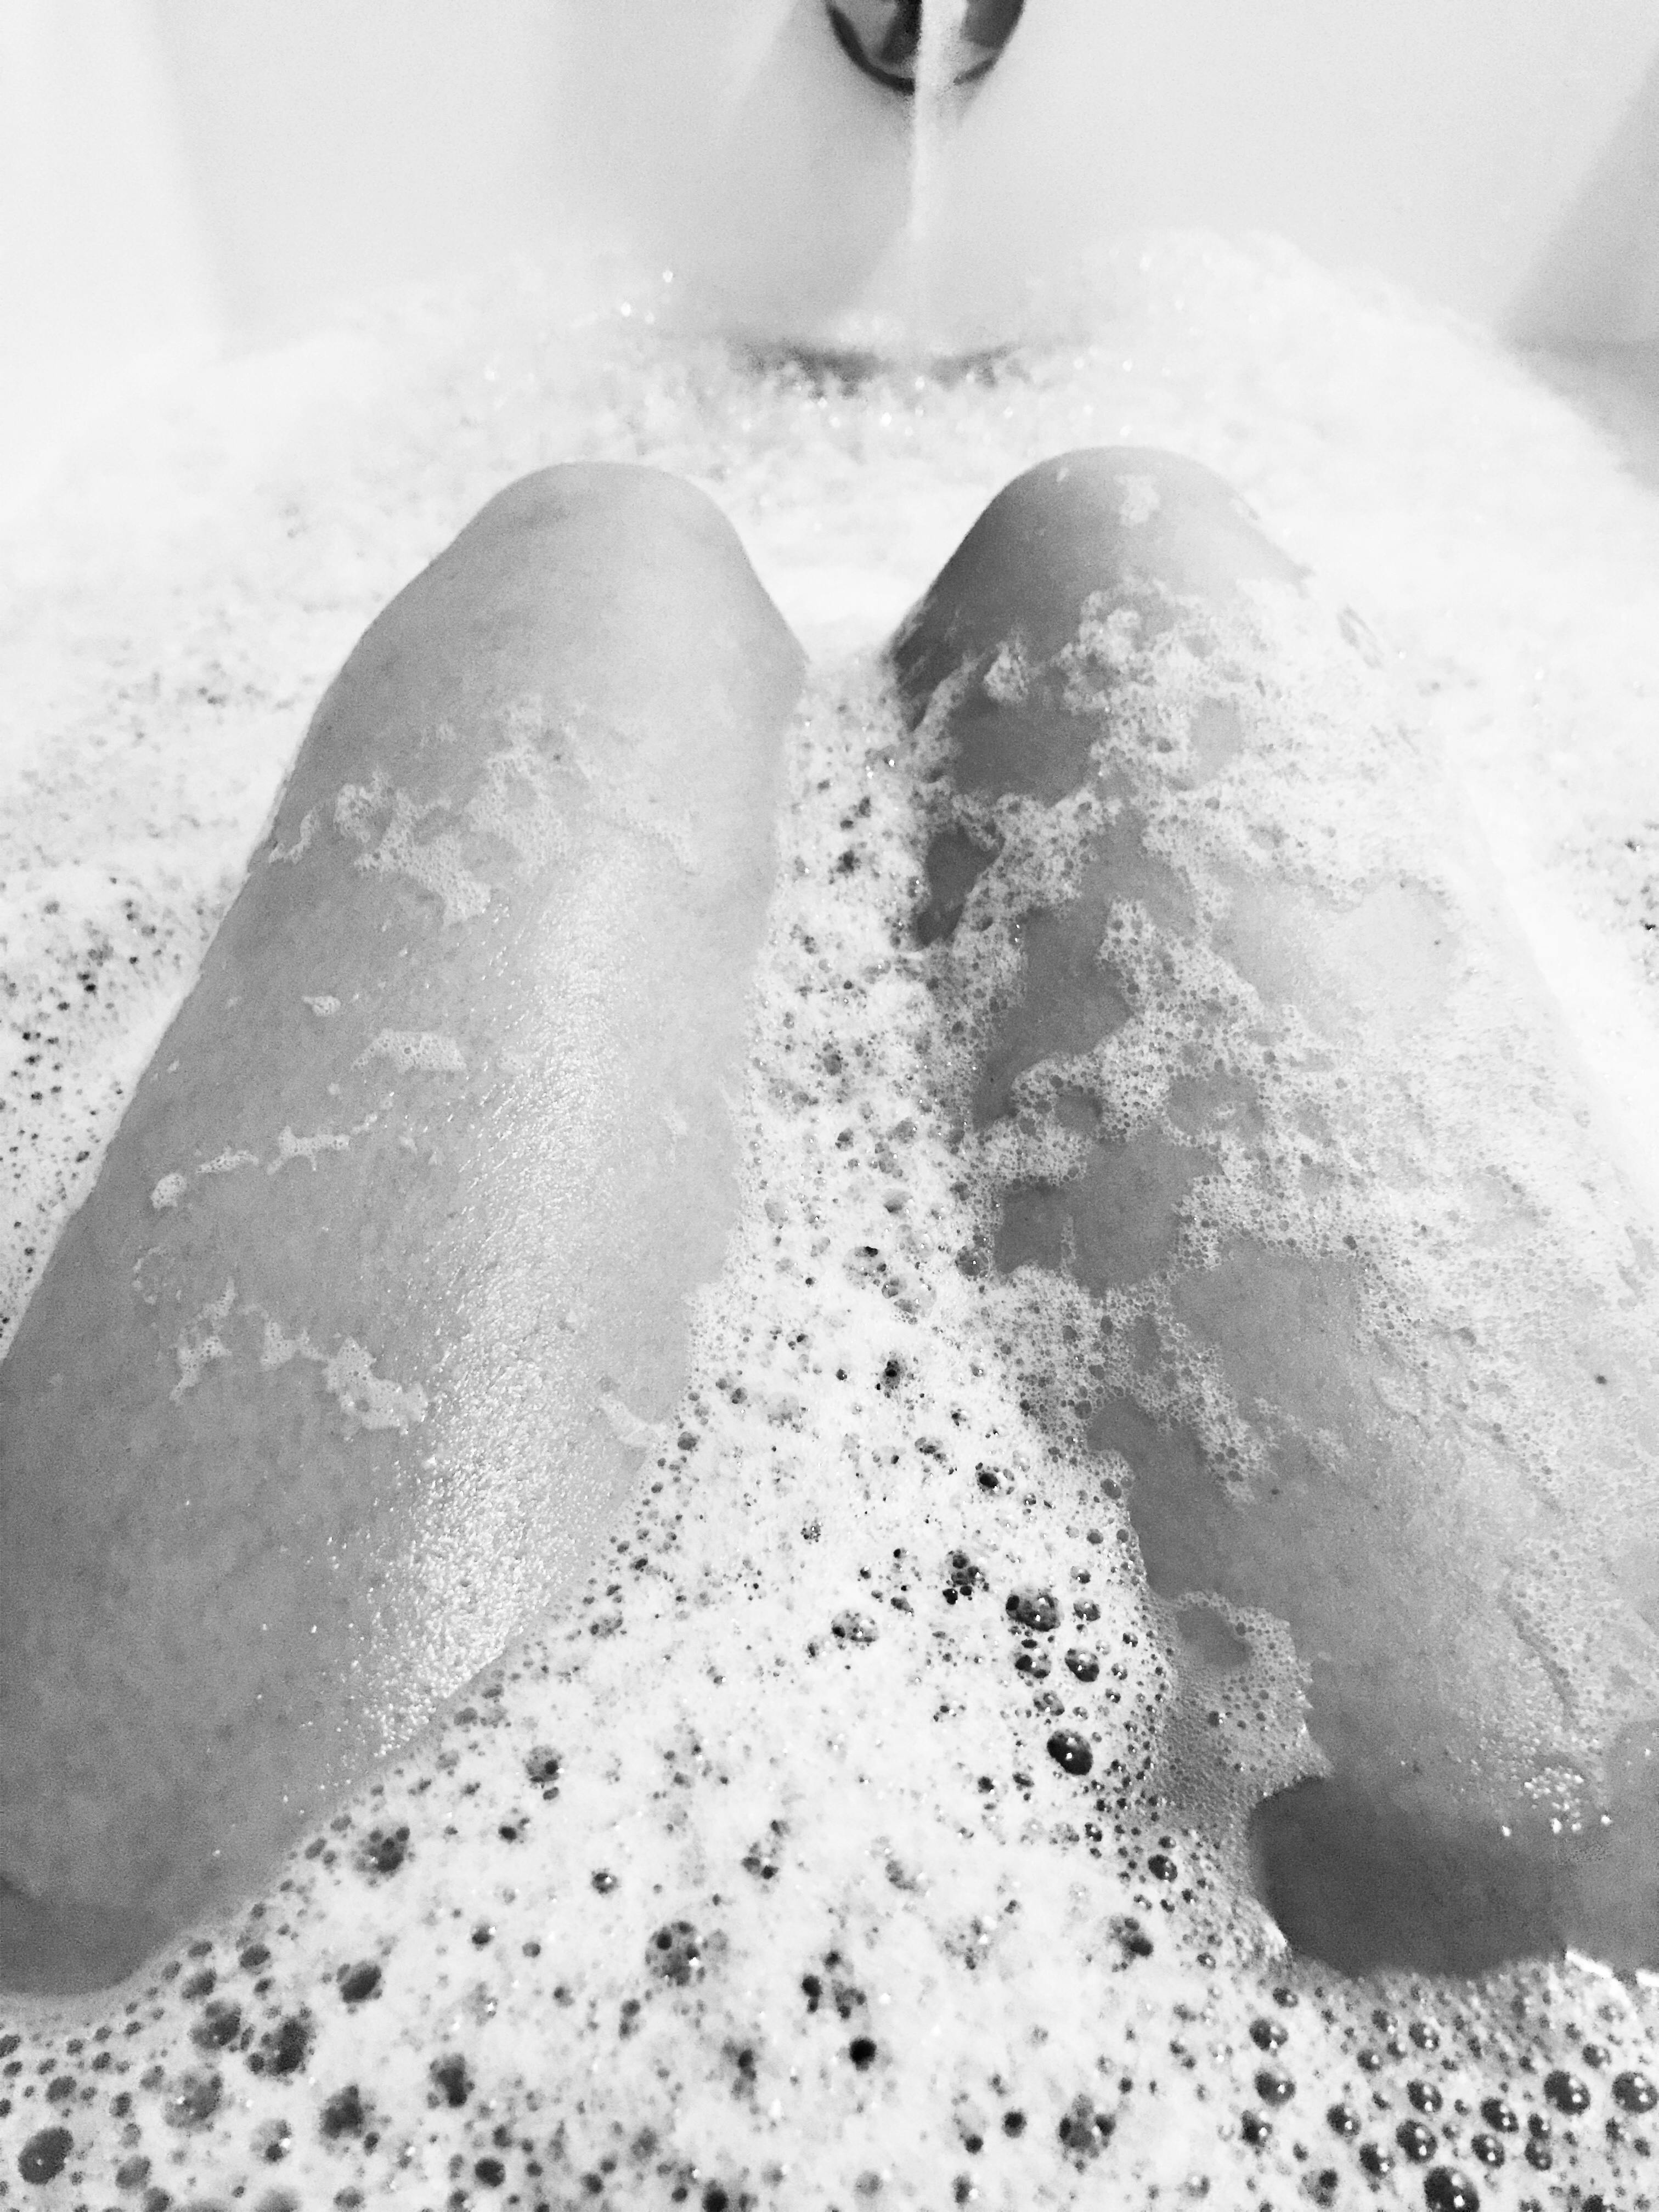 Free stock photo of bath tub, Bubble bath, bubbles